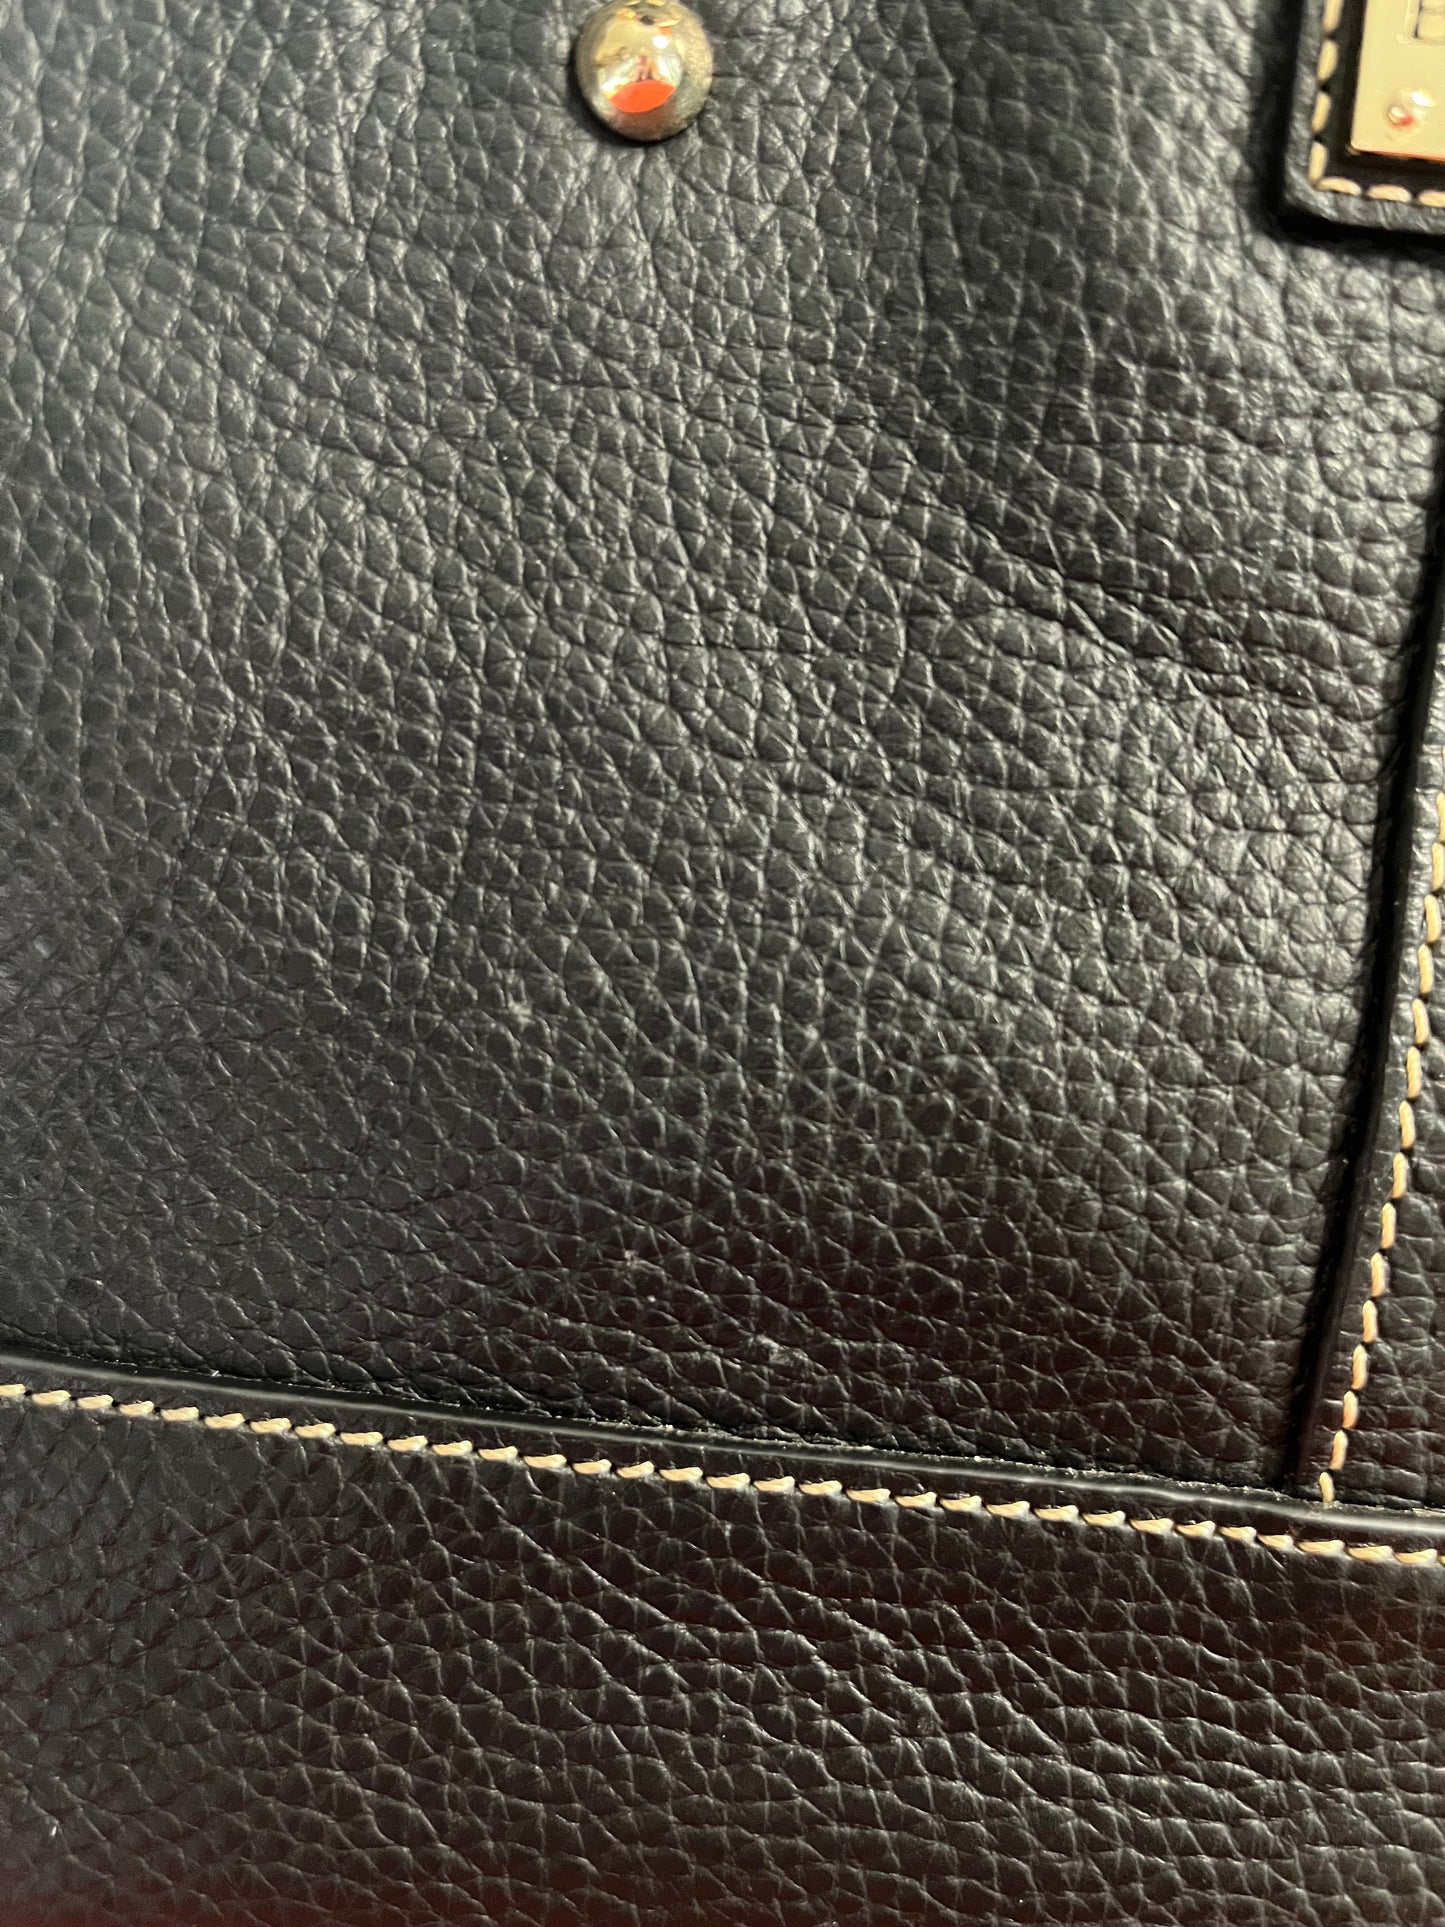 Dooney & Bourke Saffiano Small Leather Crossbody Bag - Black